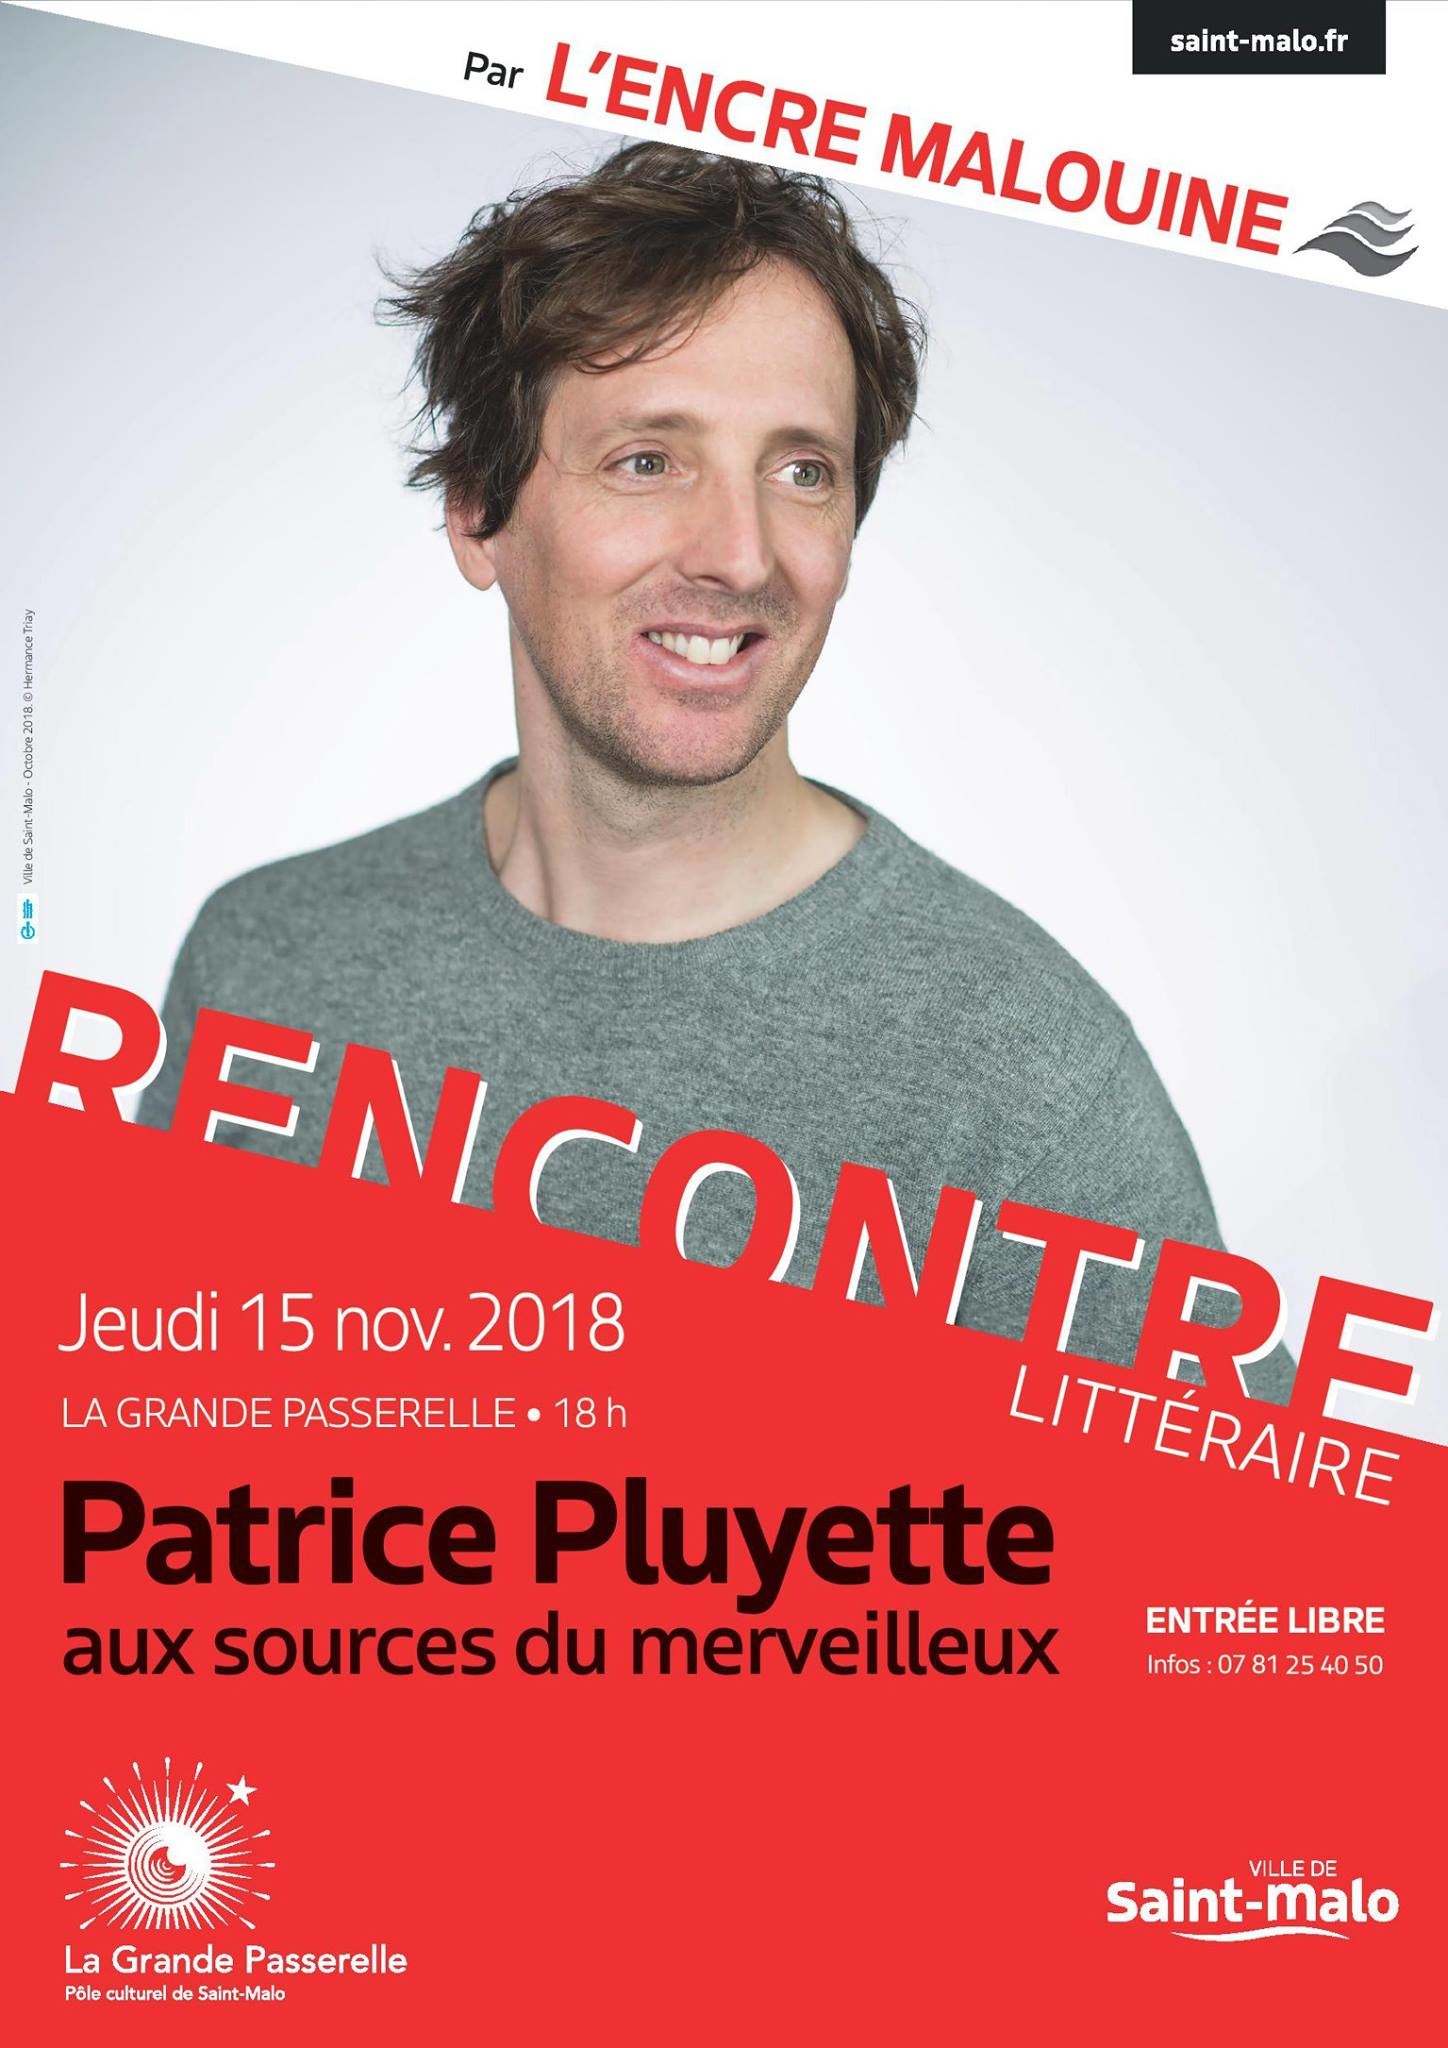 Patrice Pluyette